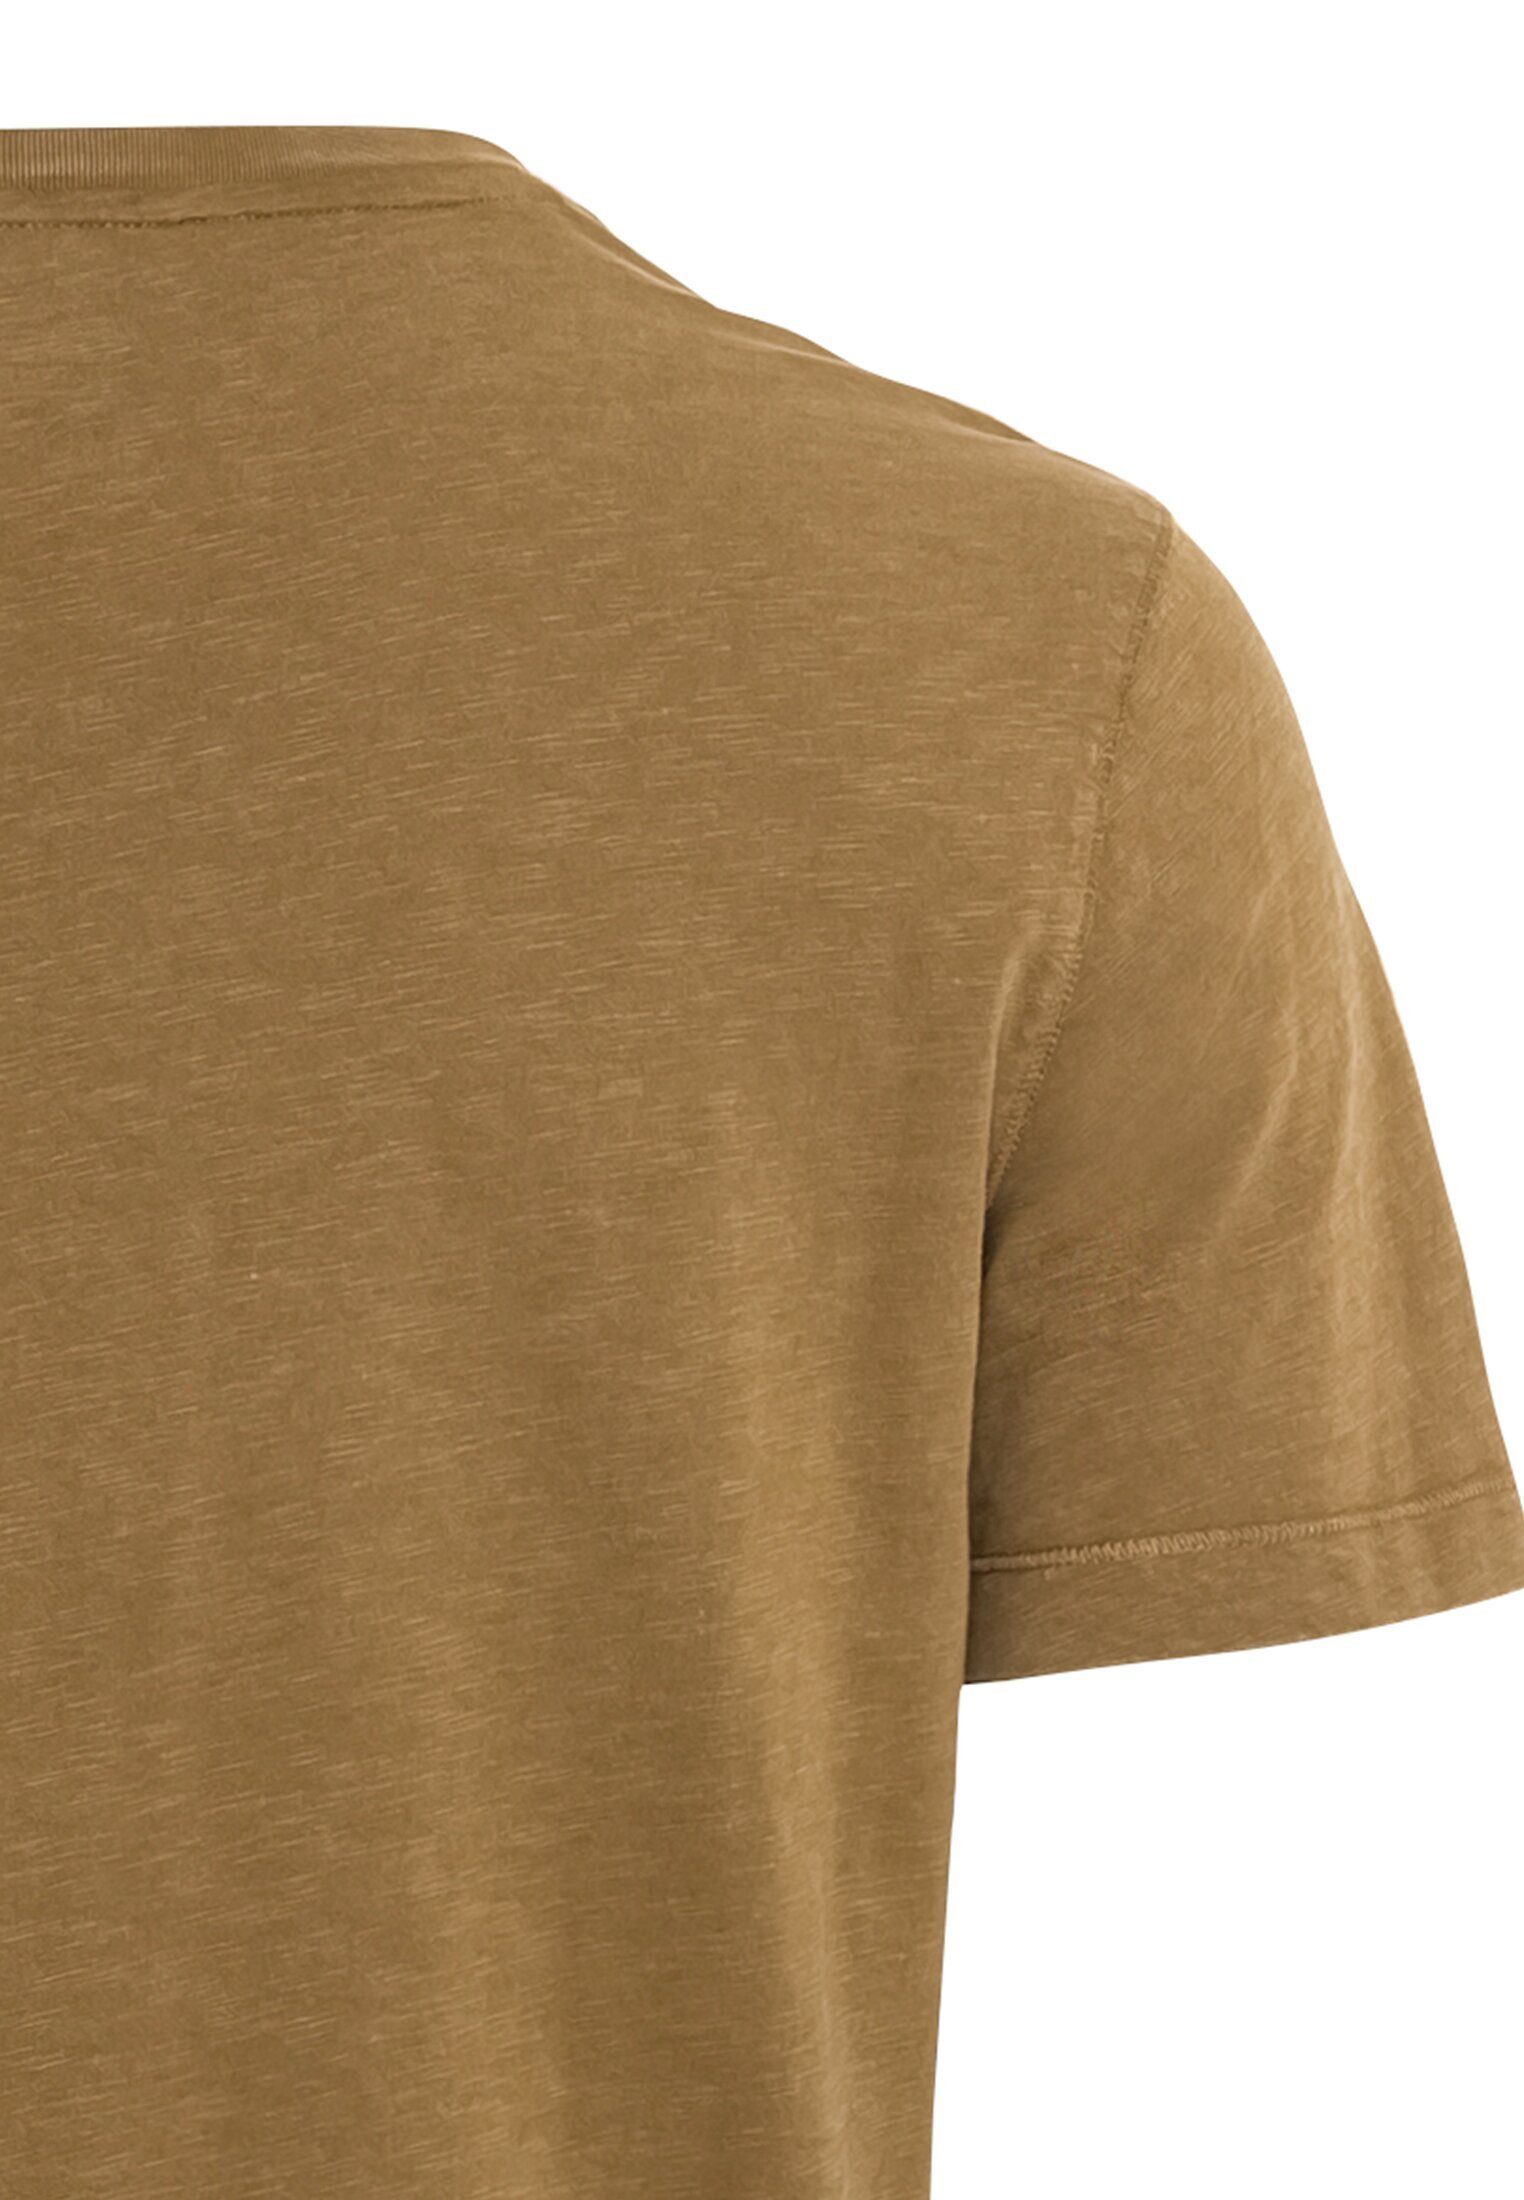 Herren Shirts camel active T-Shirt Kurzarm T-Shirt aus Organic Cotton